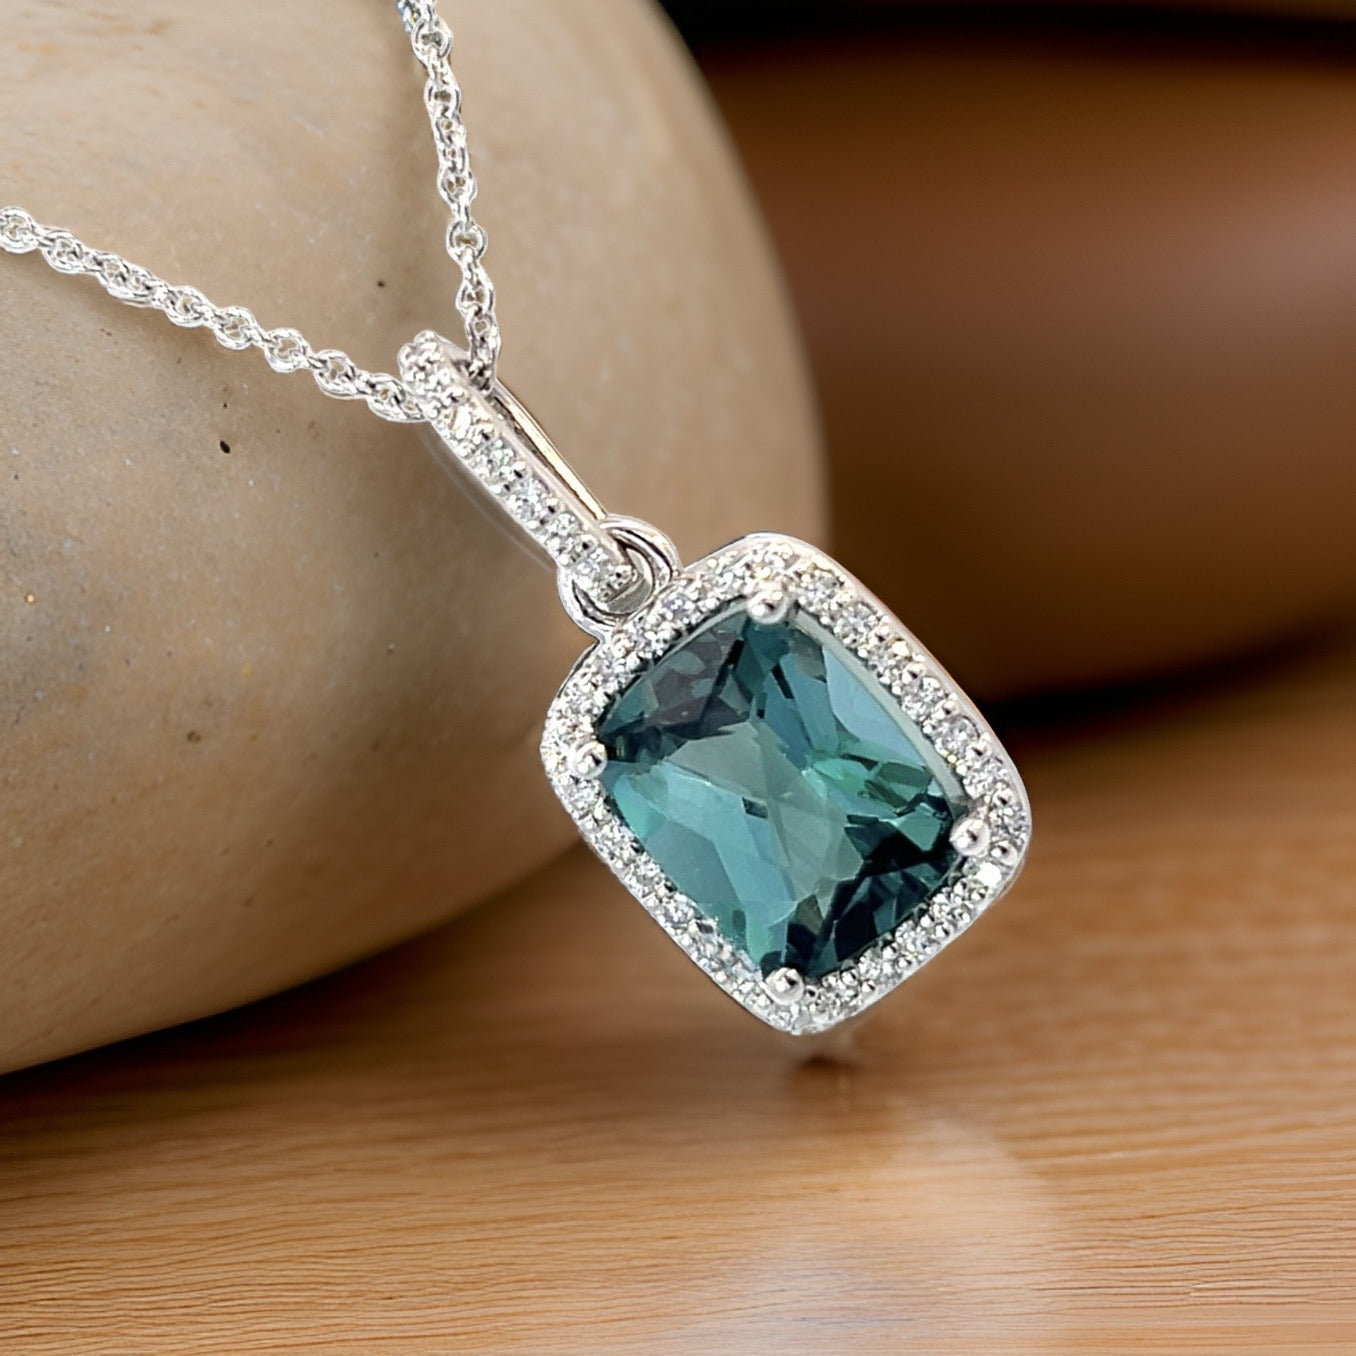 Natural Tourmaline Diamond Pendant Necklace 18" 14k W Gold 3.35 TCW Certified $4,950 311025